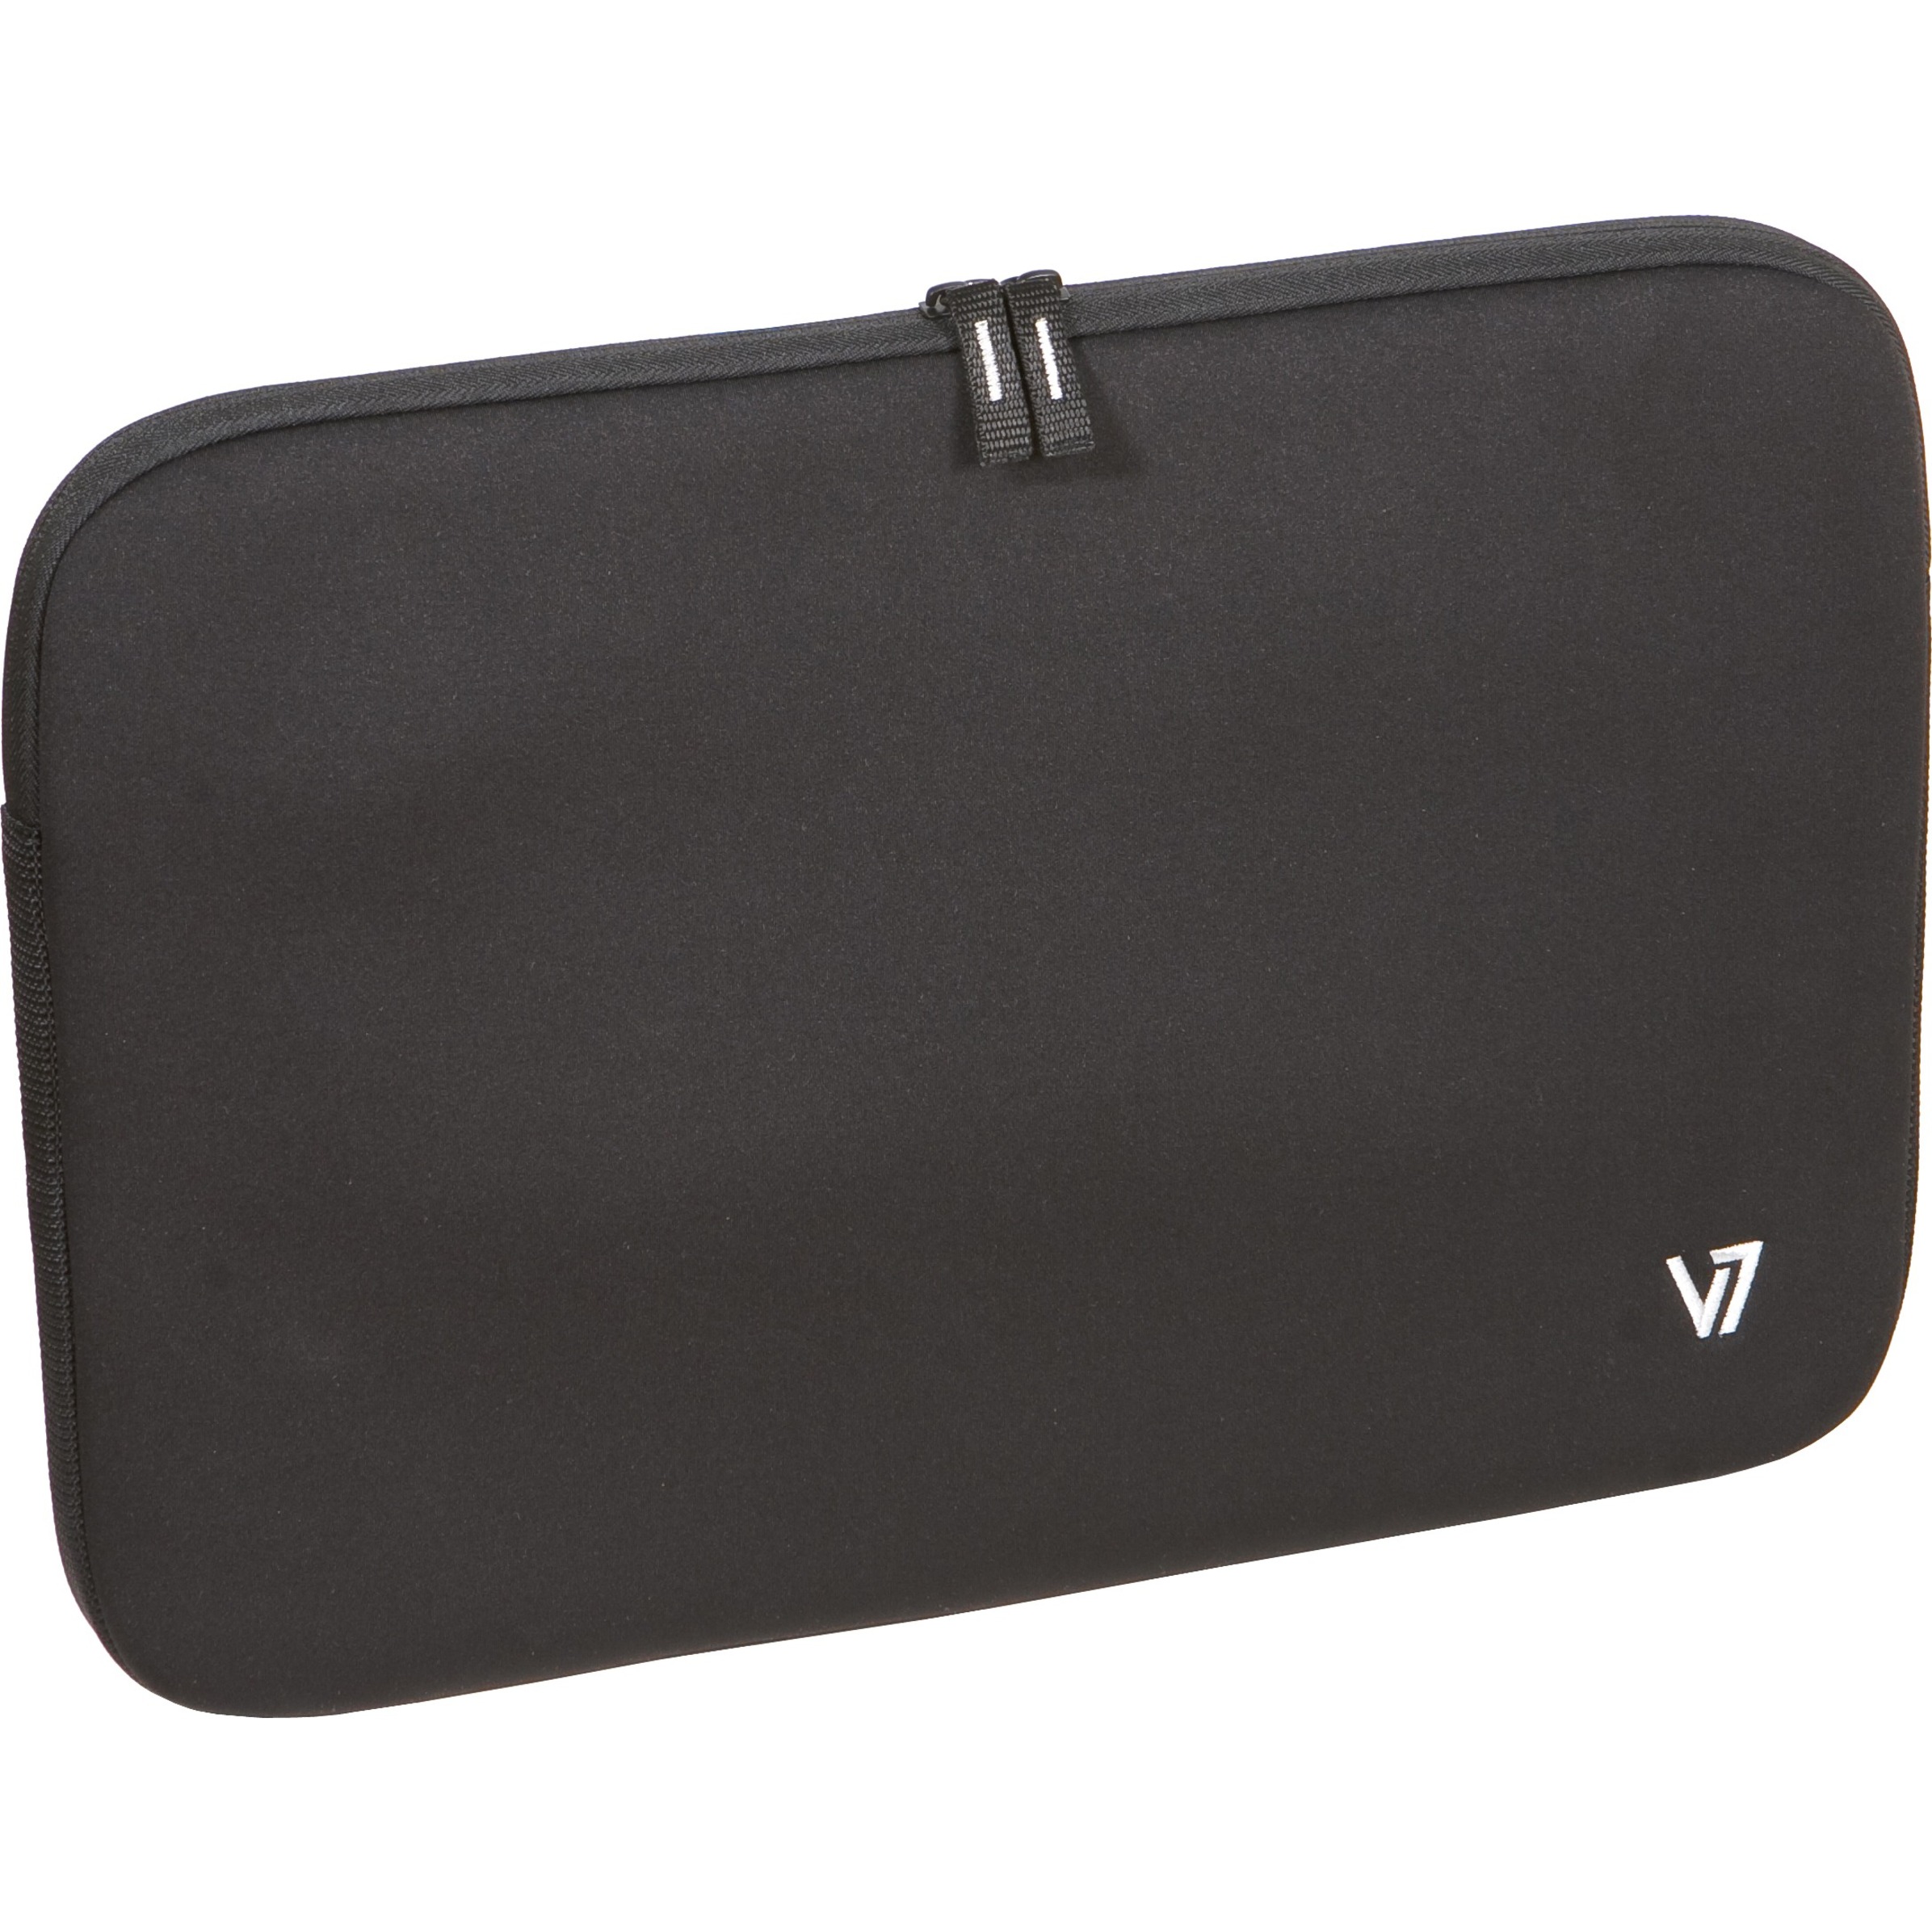 V7 Vantage 16" Laptop Sleeve - image 1 of 4